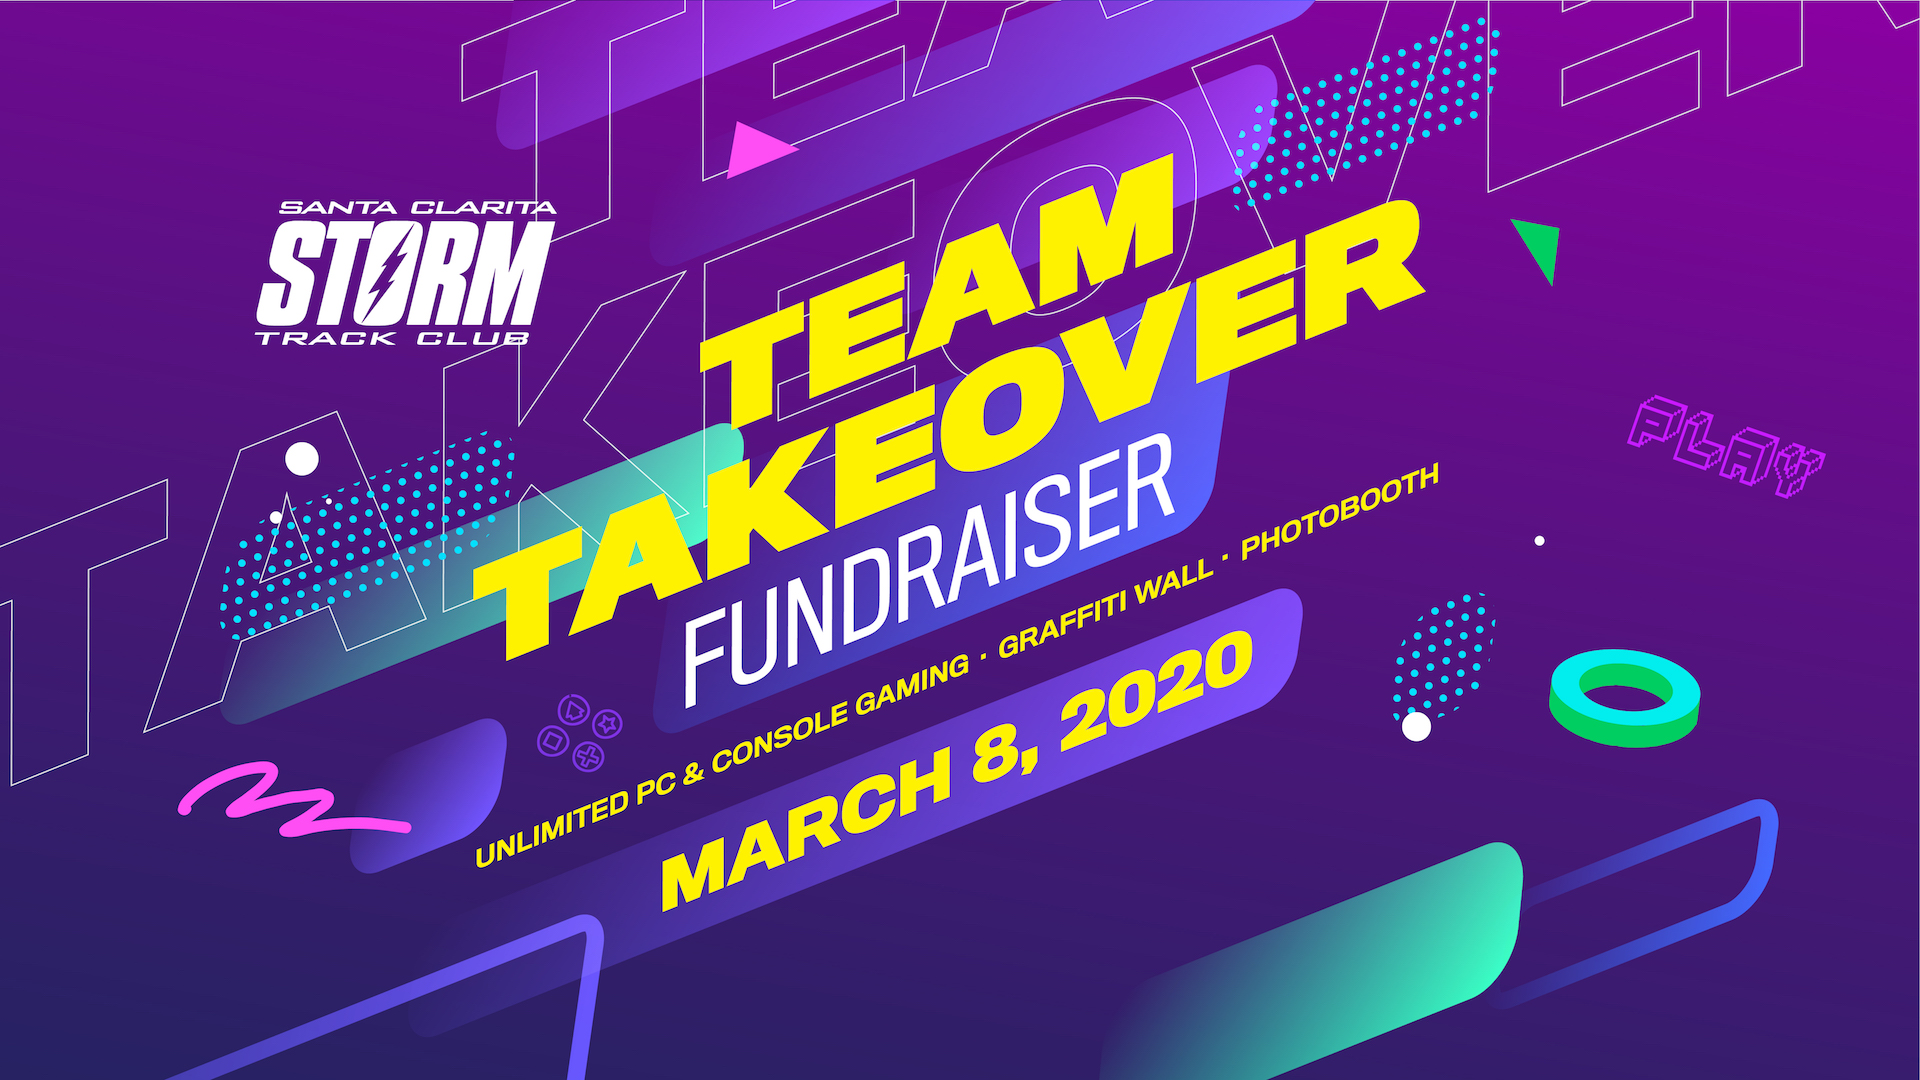 team takeover fundraiser mar 8 poster